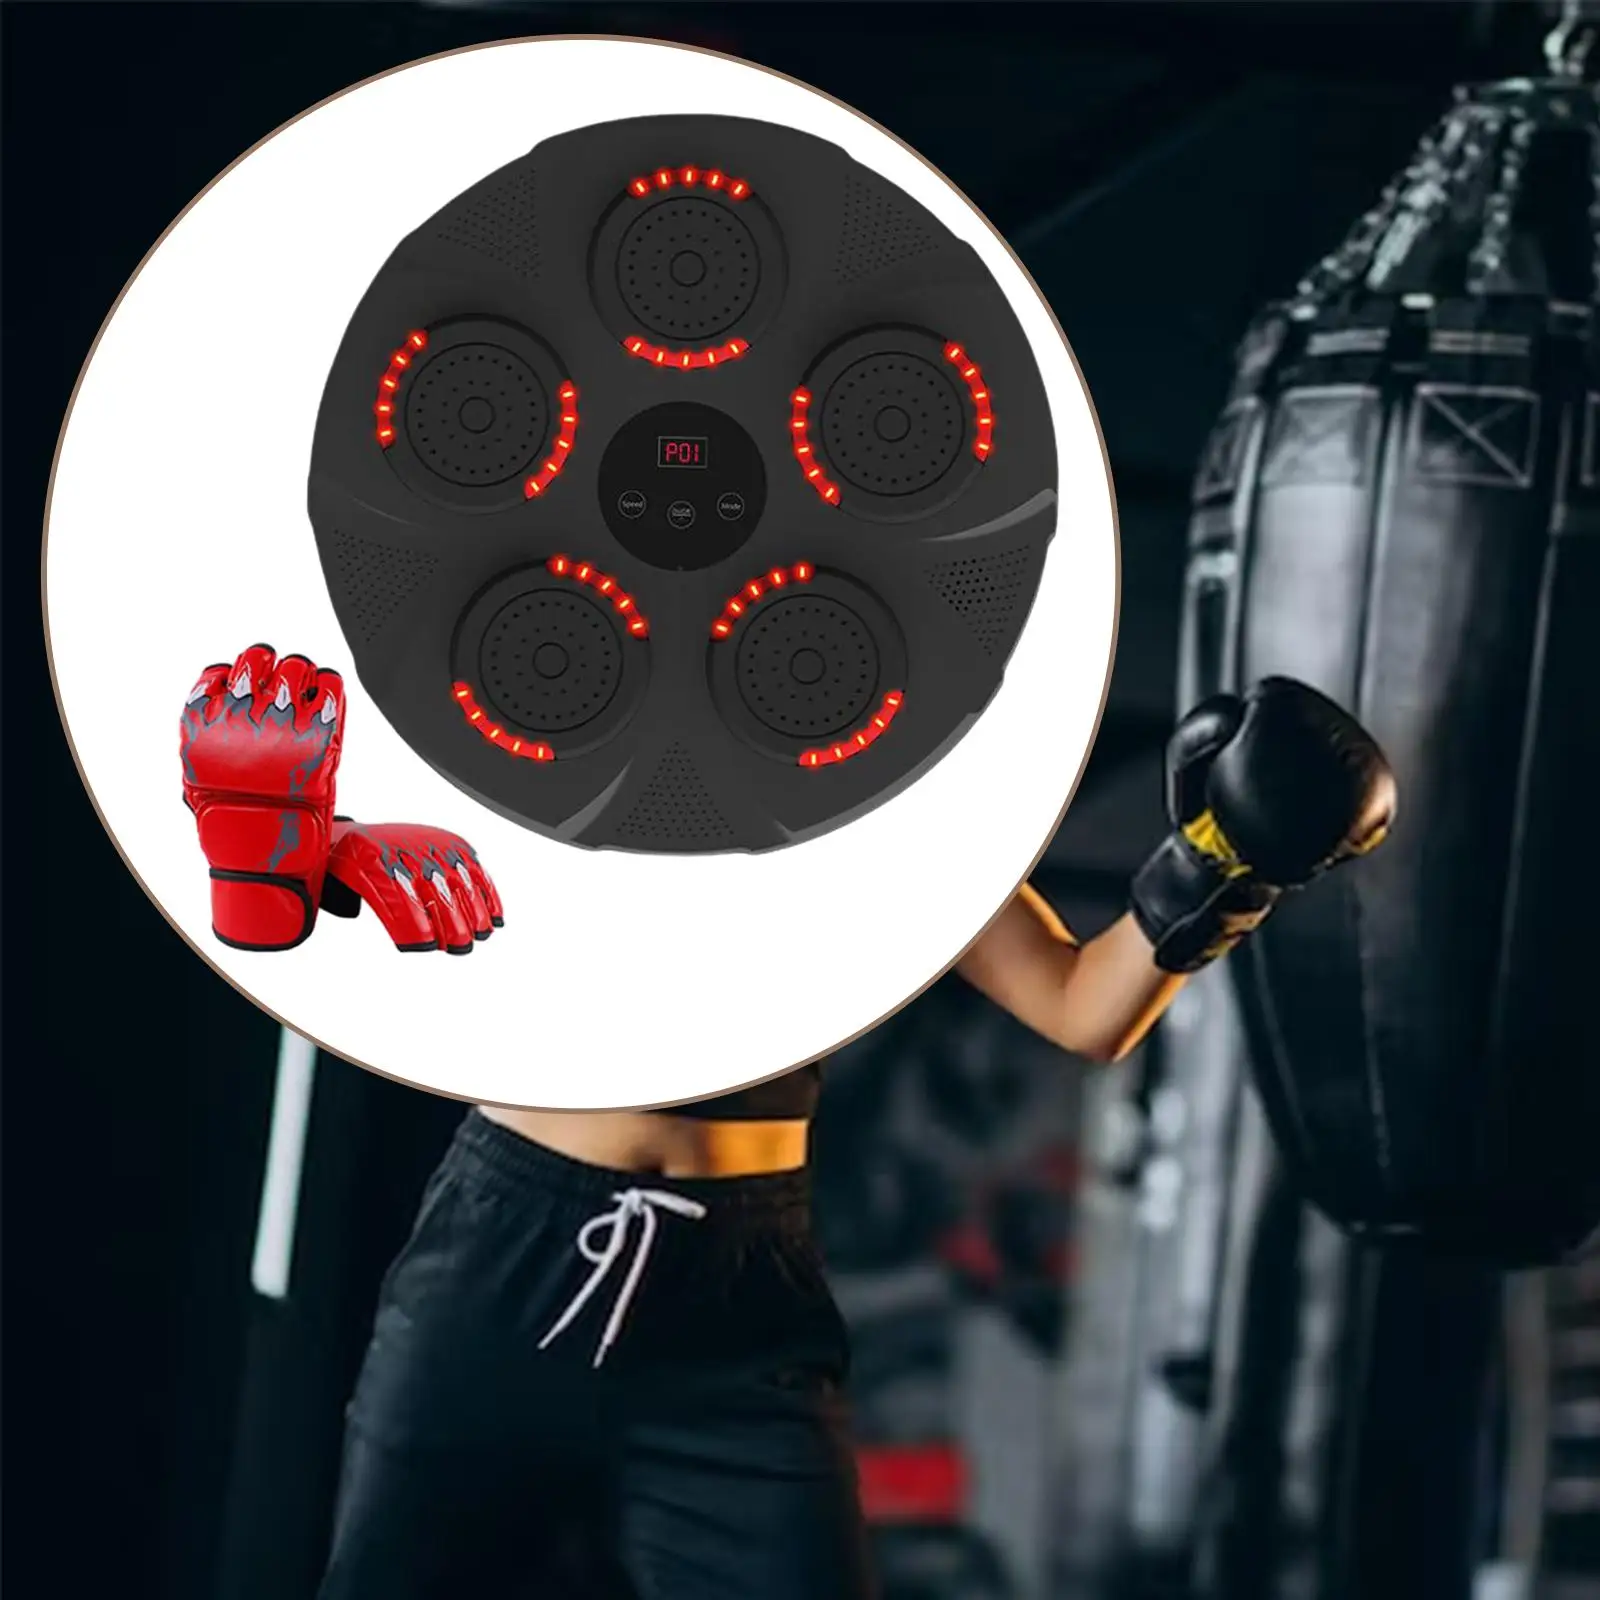 Smart Electronic Music Wall Boxing Training Machine Sandbag Set with Lights for